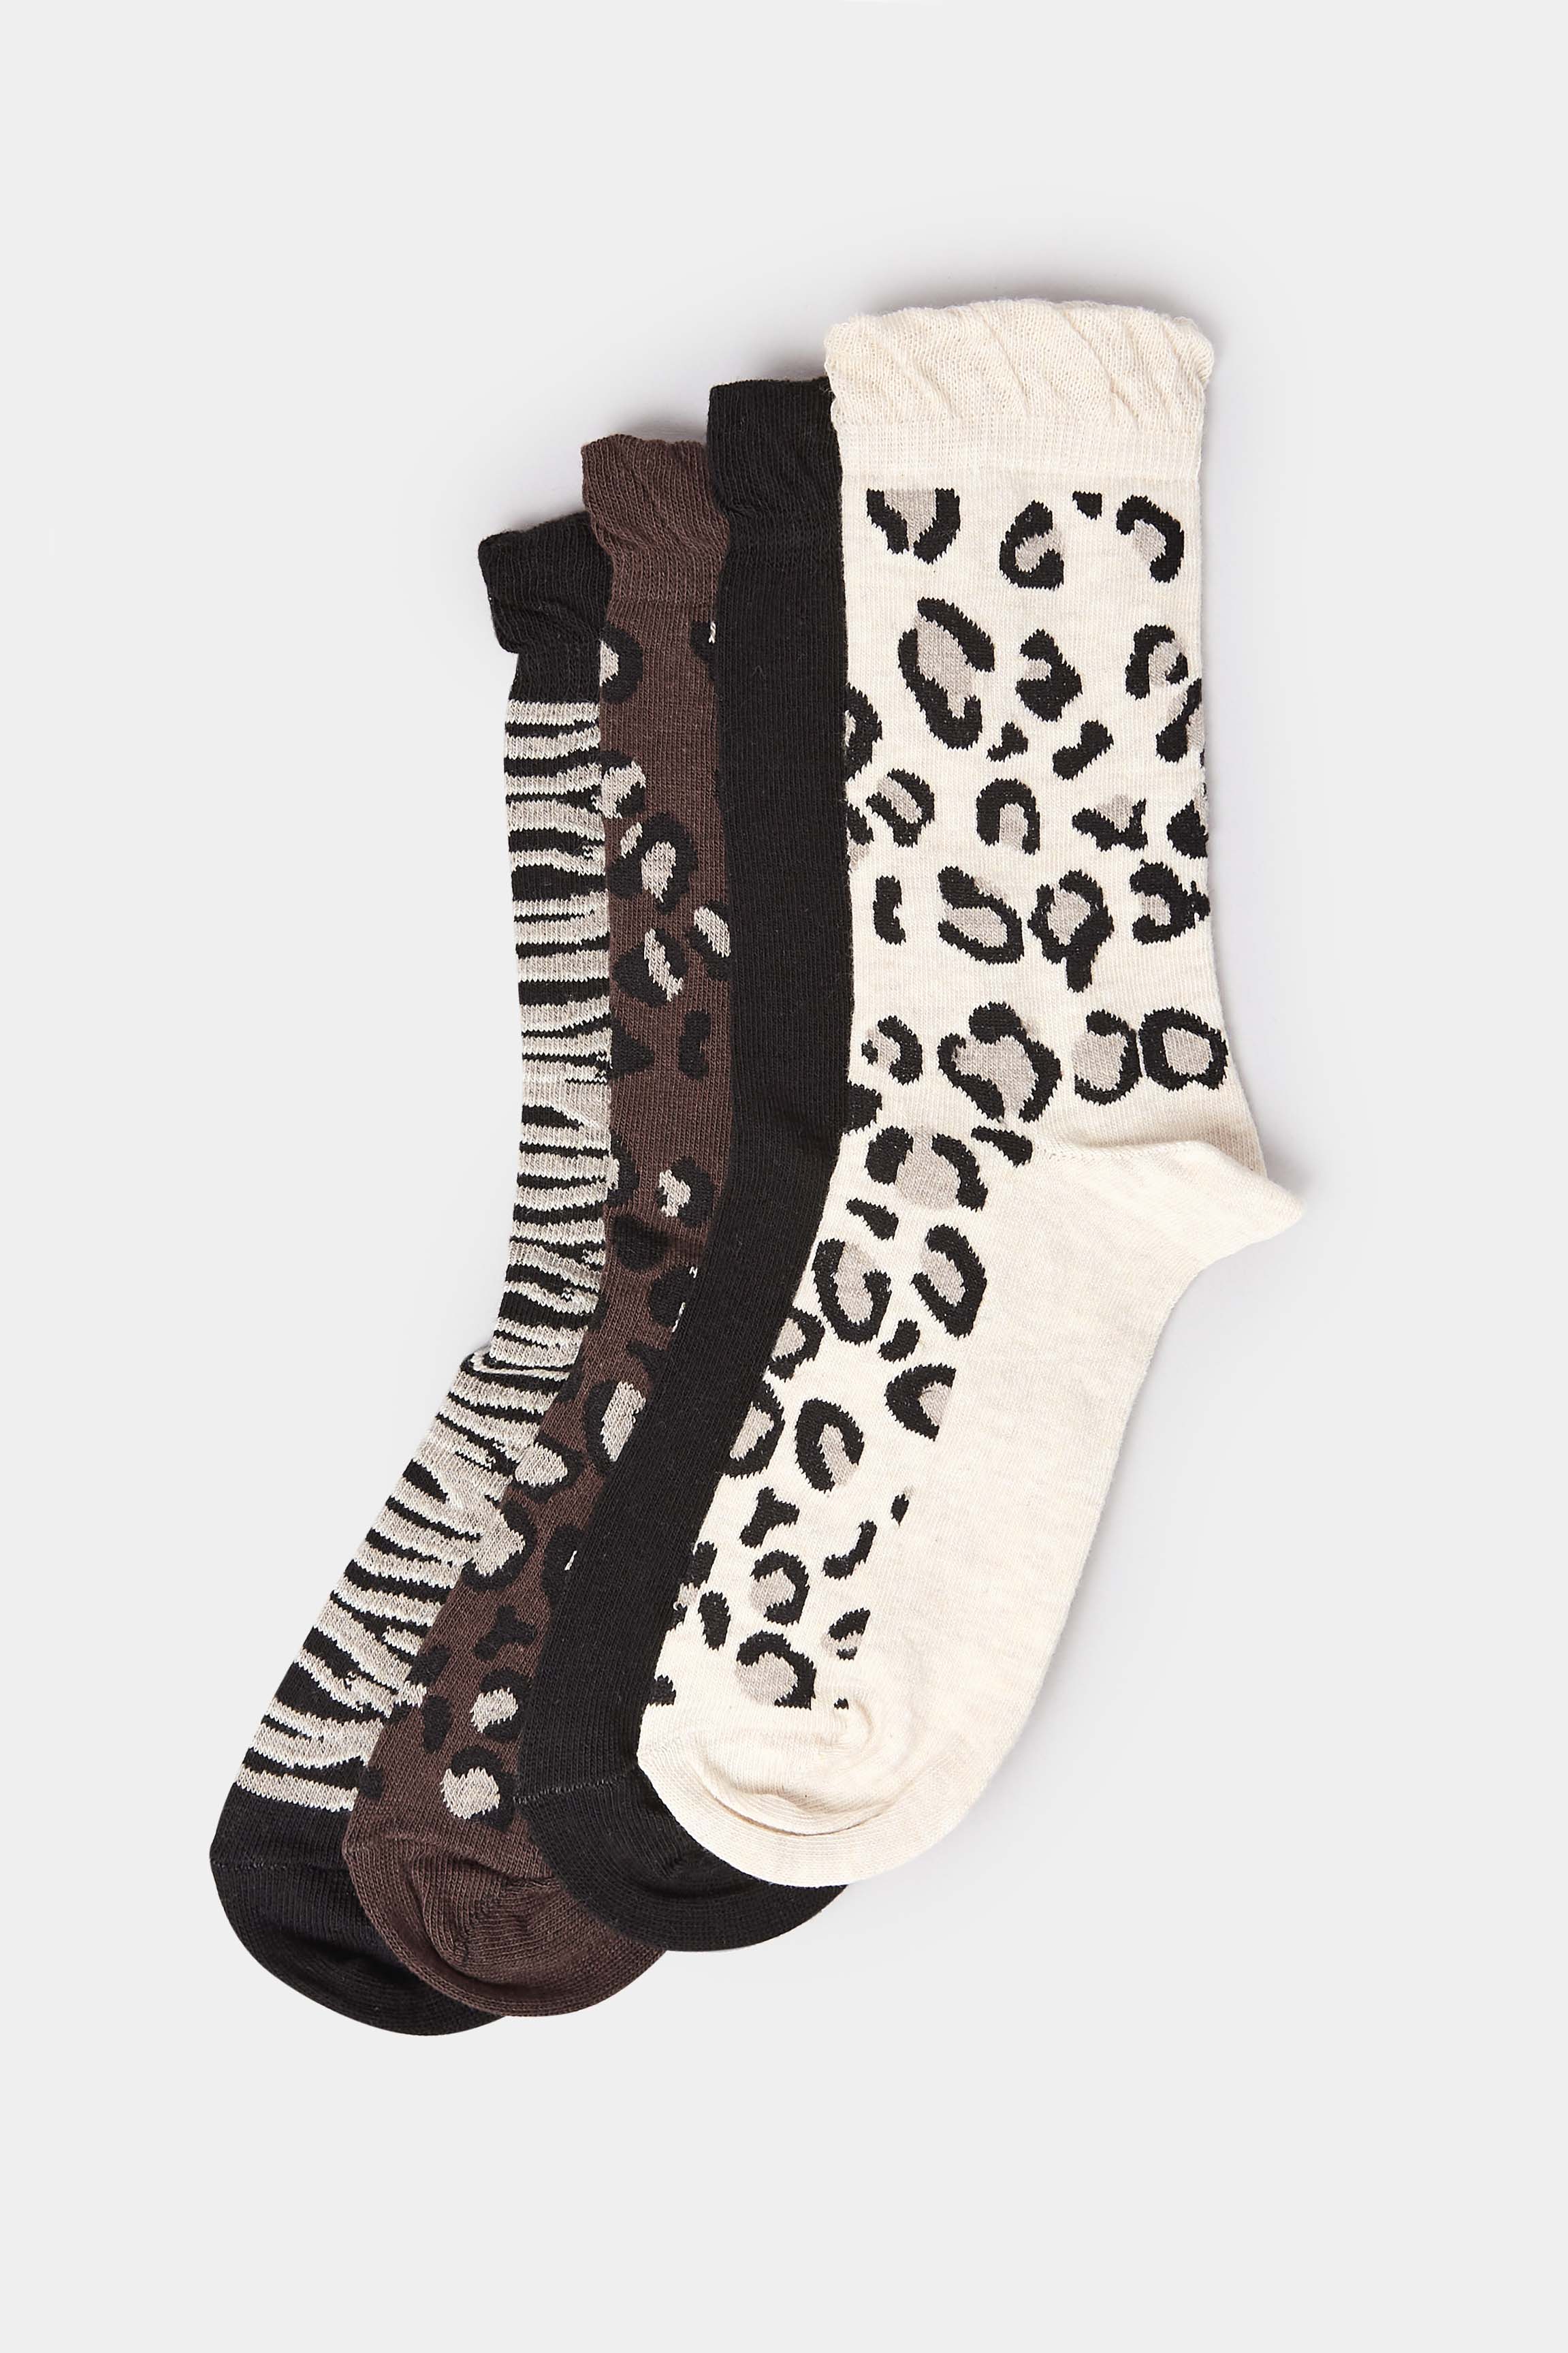 4 PACK White & Black Animal Print Socks | Yours Clothing  3